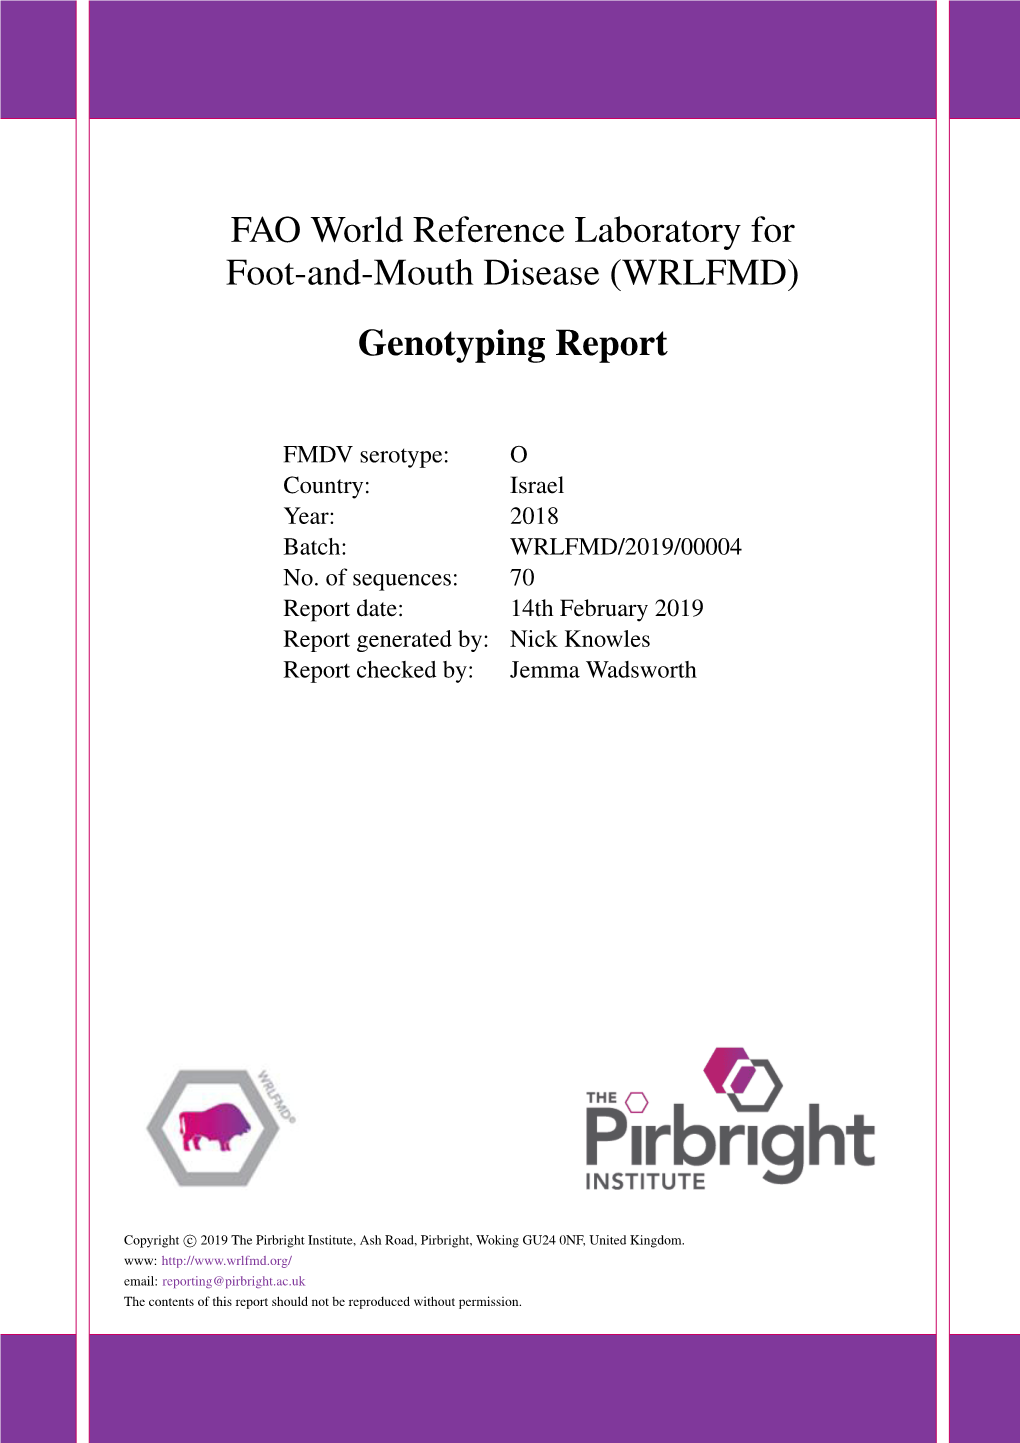 (WRLFMD) Genotyping Report